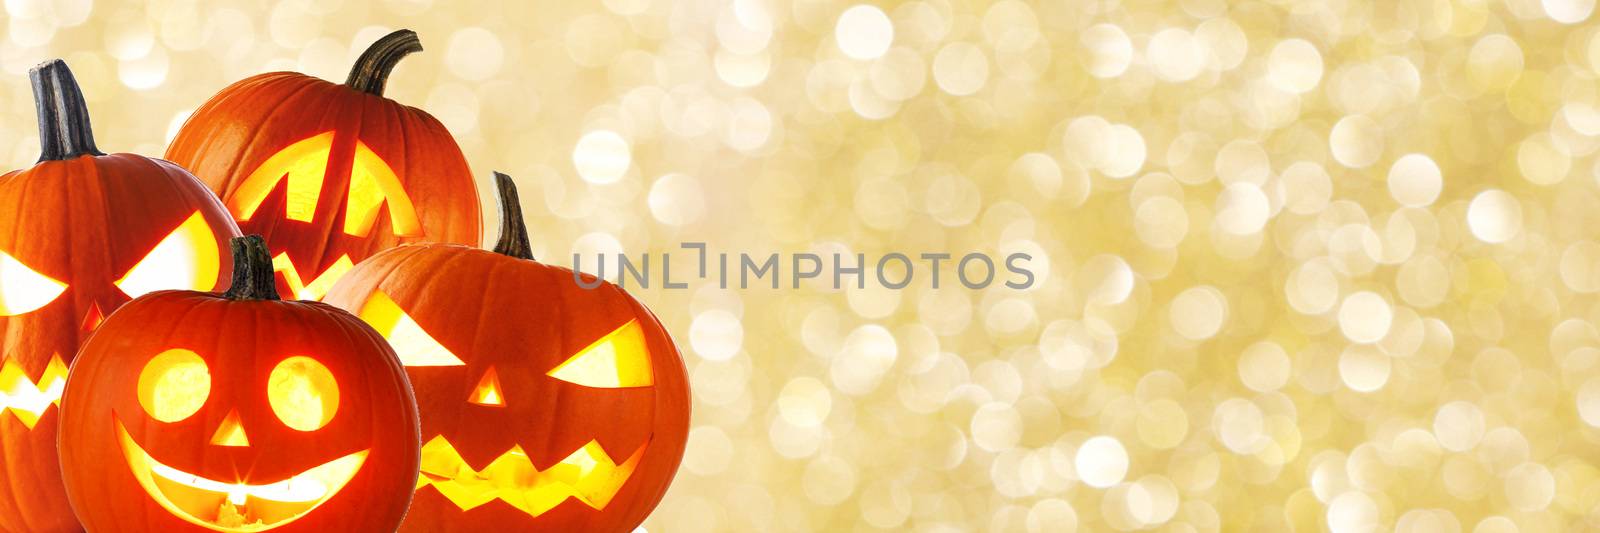 Jack O Lantern Halloween pumpkins by Yellowj